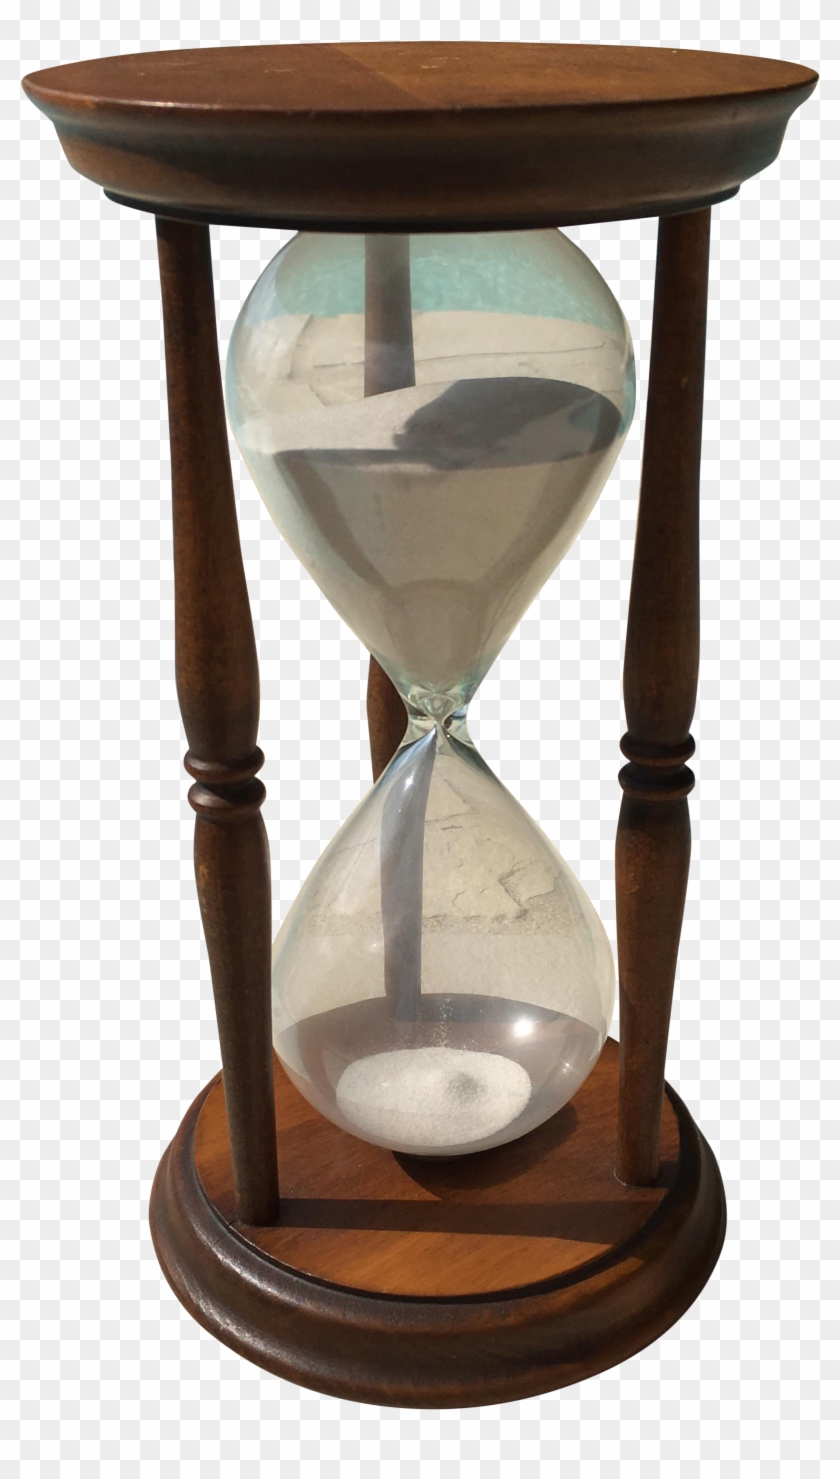 1781 X 3052 11 - Vintage Sand Clock Png Clipart